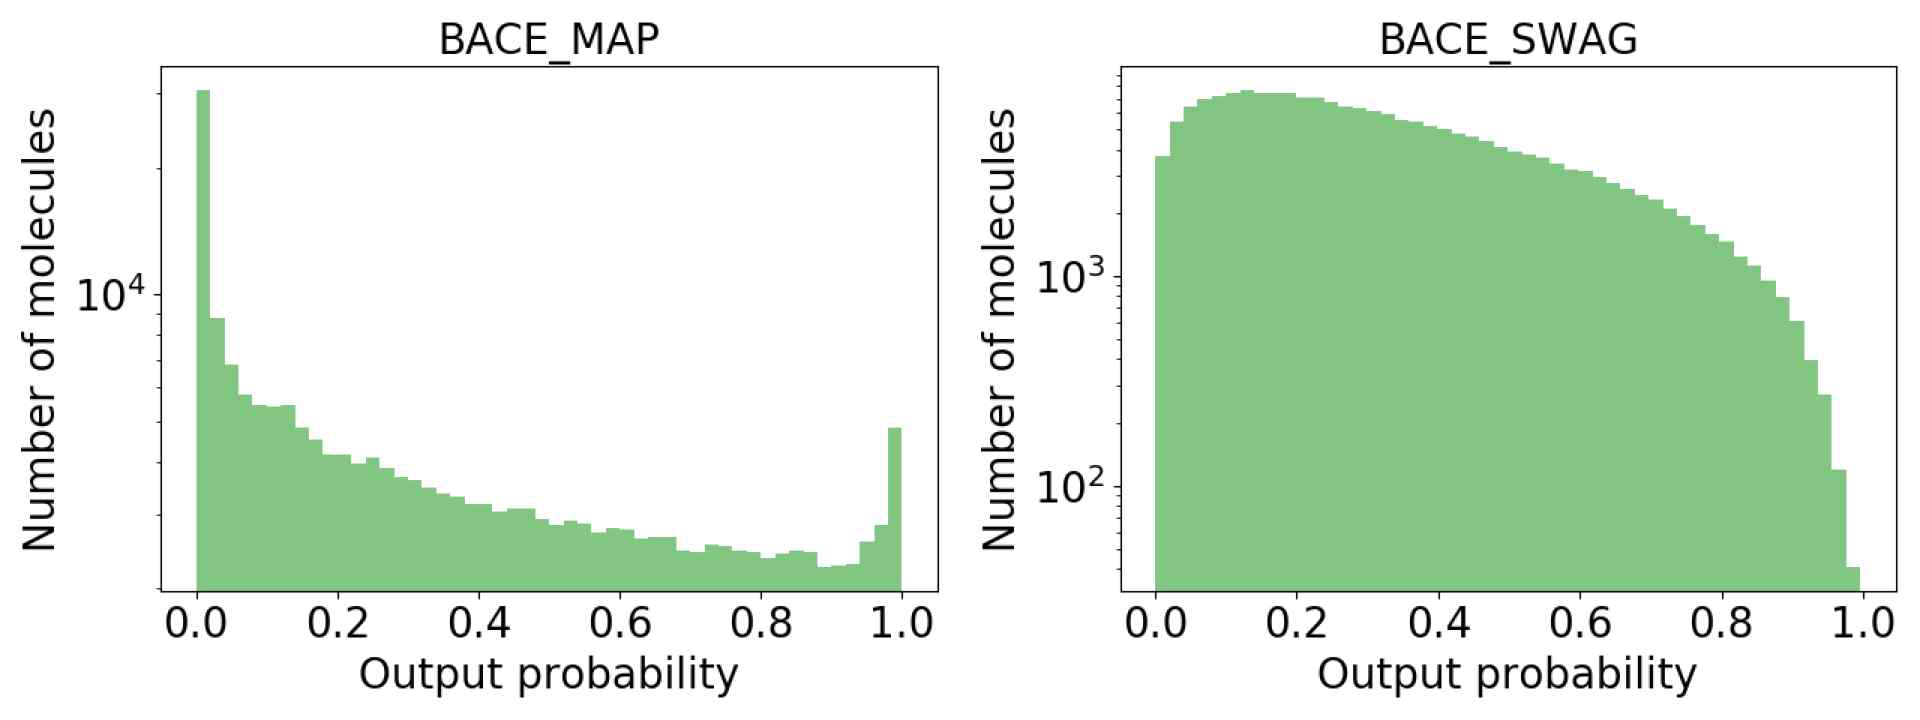 MAP 방법과 SWAG 방법으로 훈련된 BACE 분류모델을 ZINC 데이터베이스이 drug-like subset에 적용하였을 때의 예측값 분포